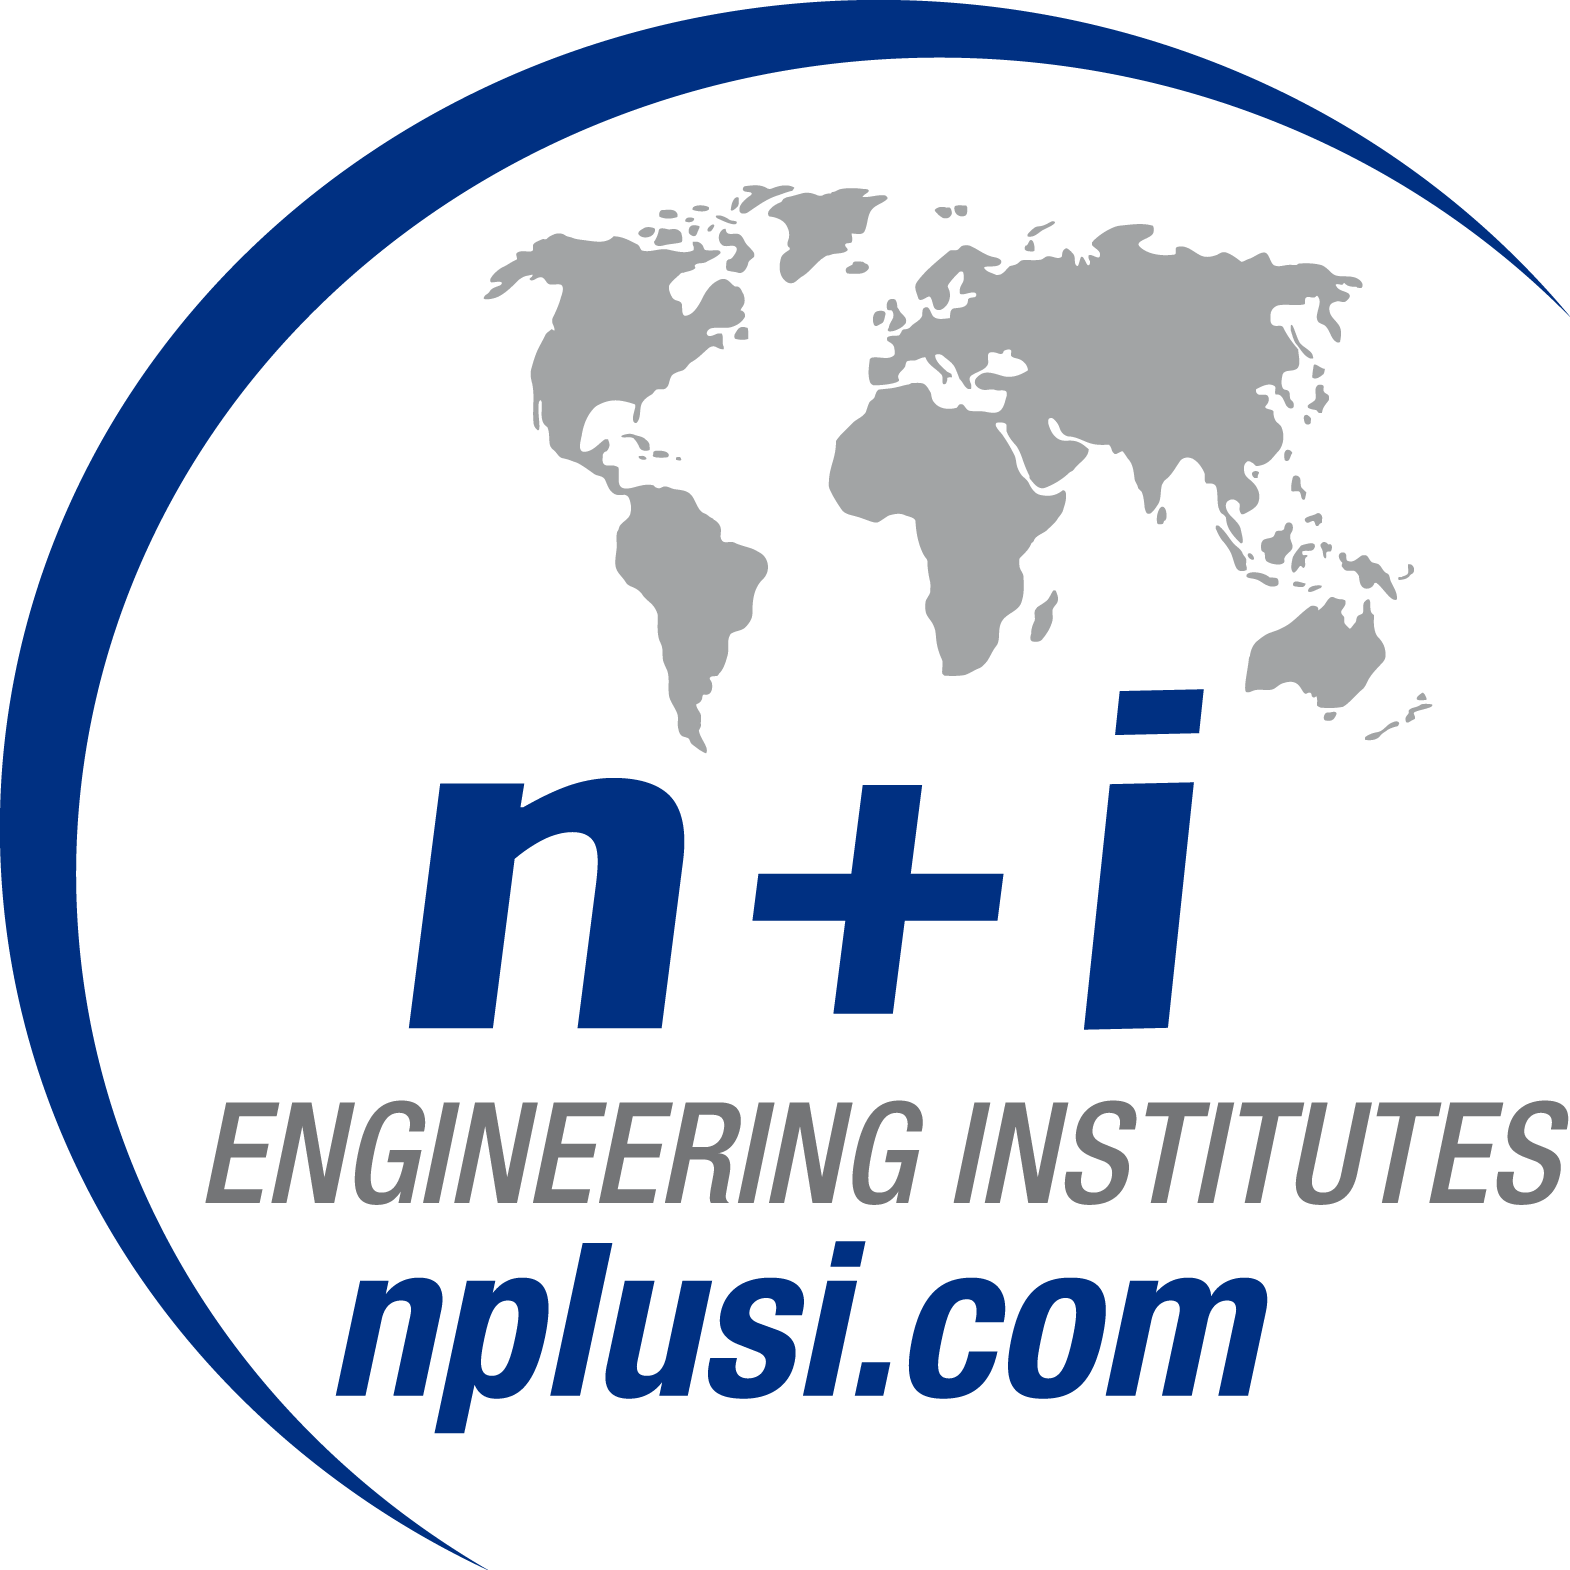 admissions international etudiant ingenieurs